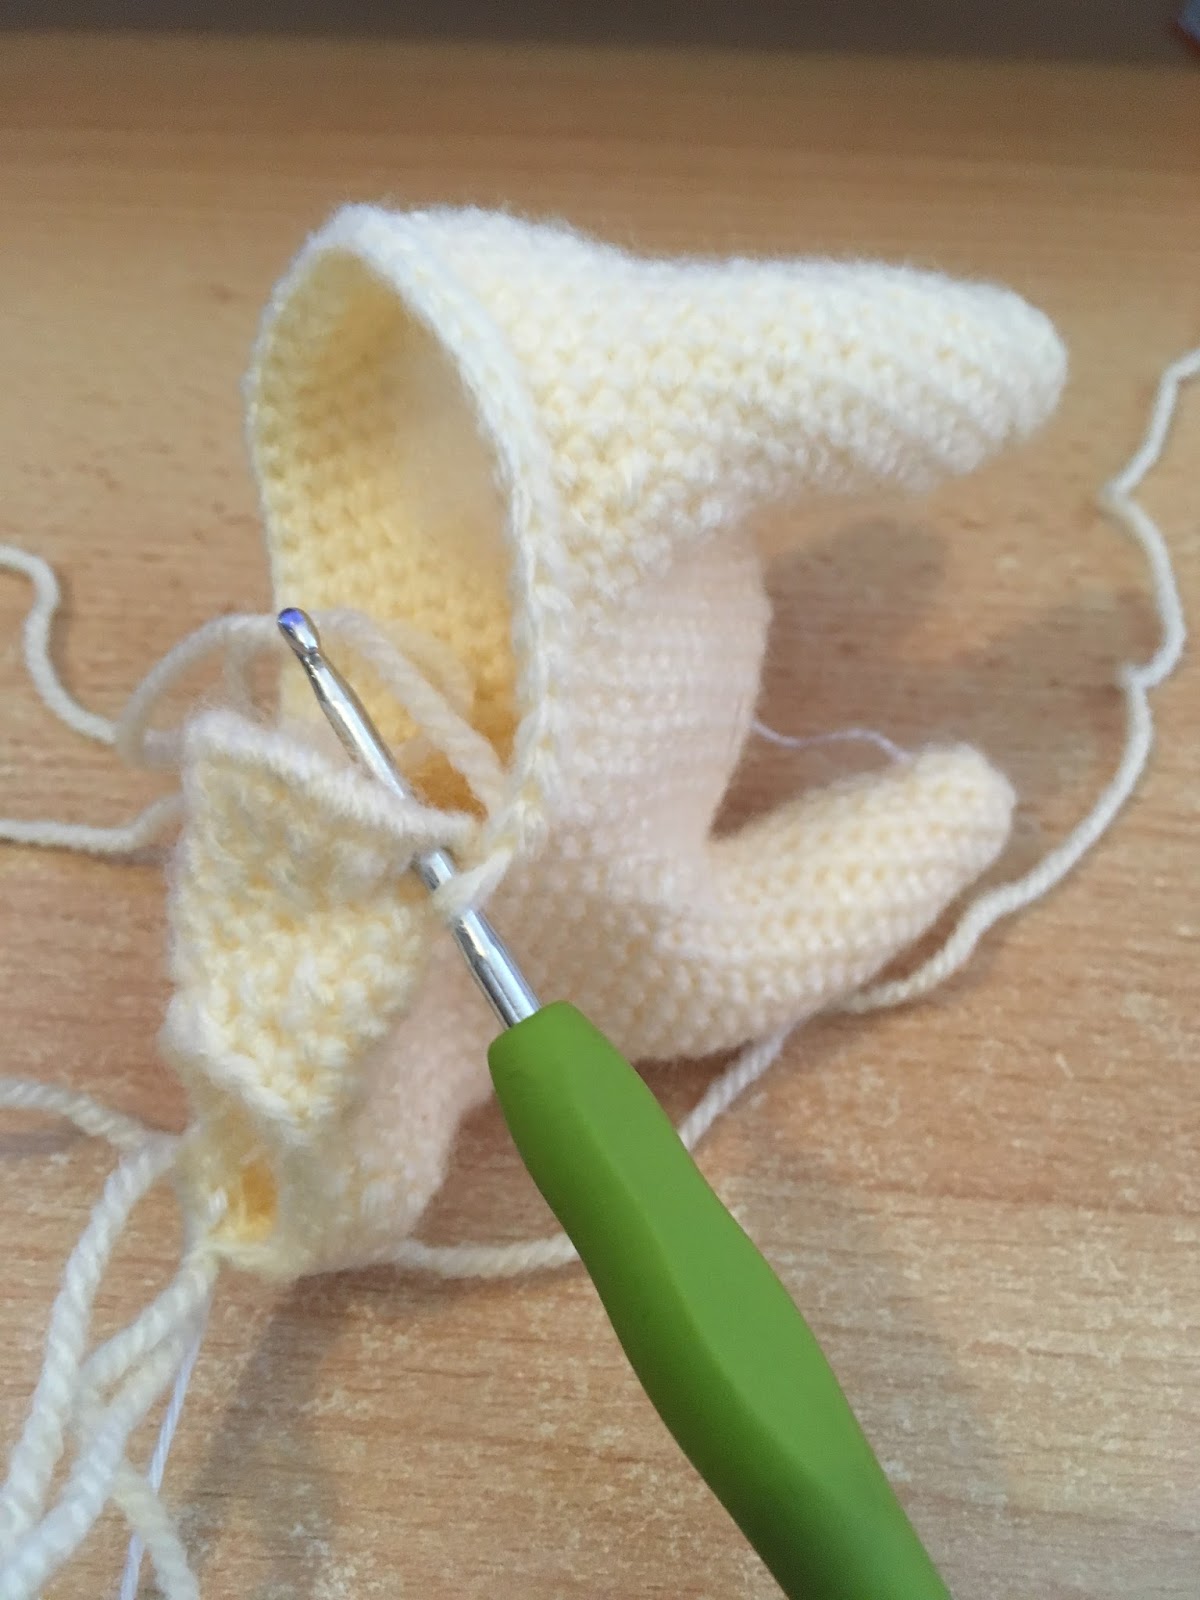 Amigurumi Alpaca – Free Crochet Pattern » Krafty Kait